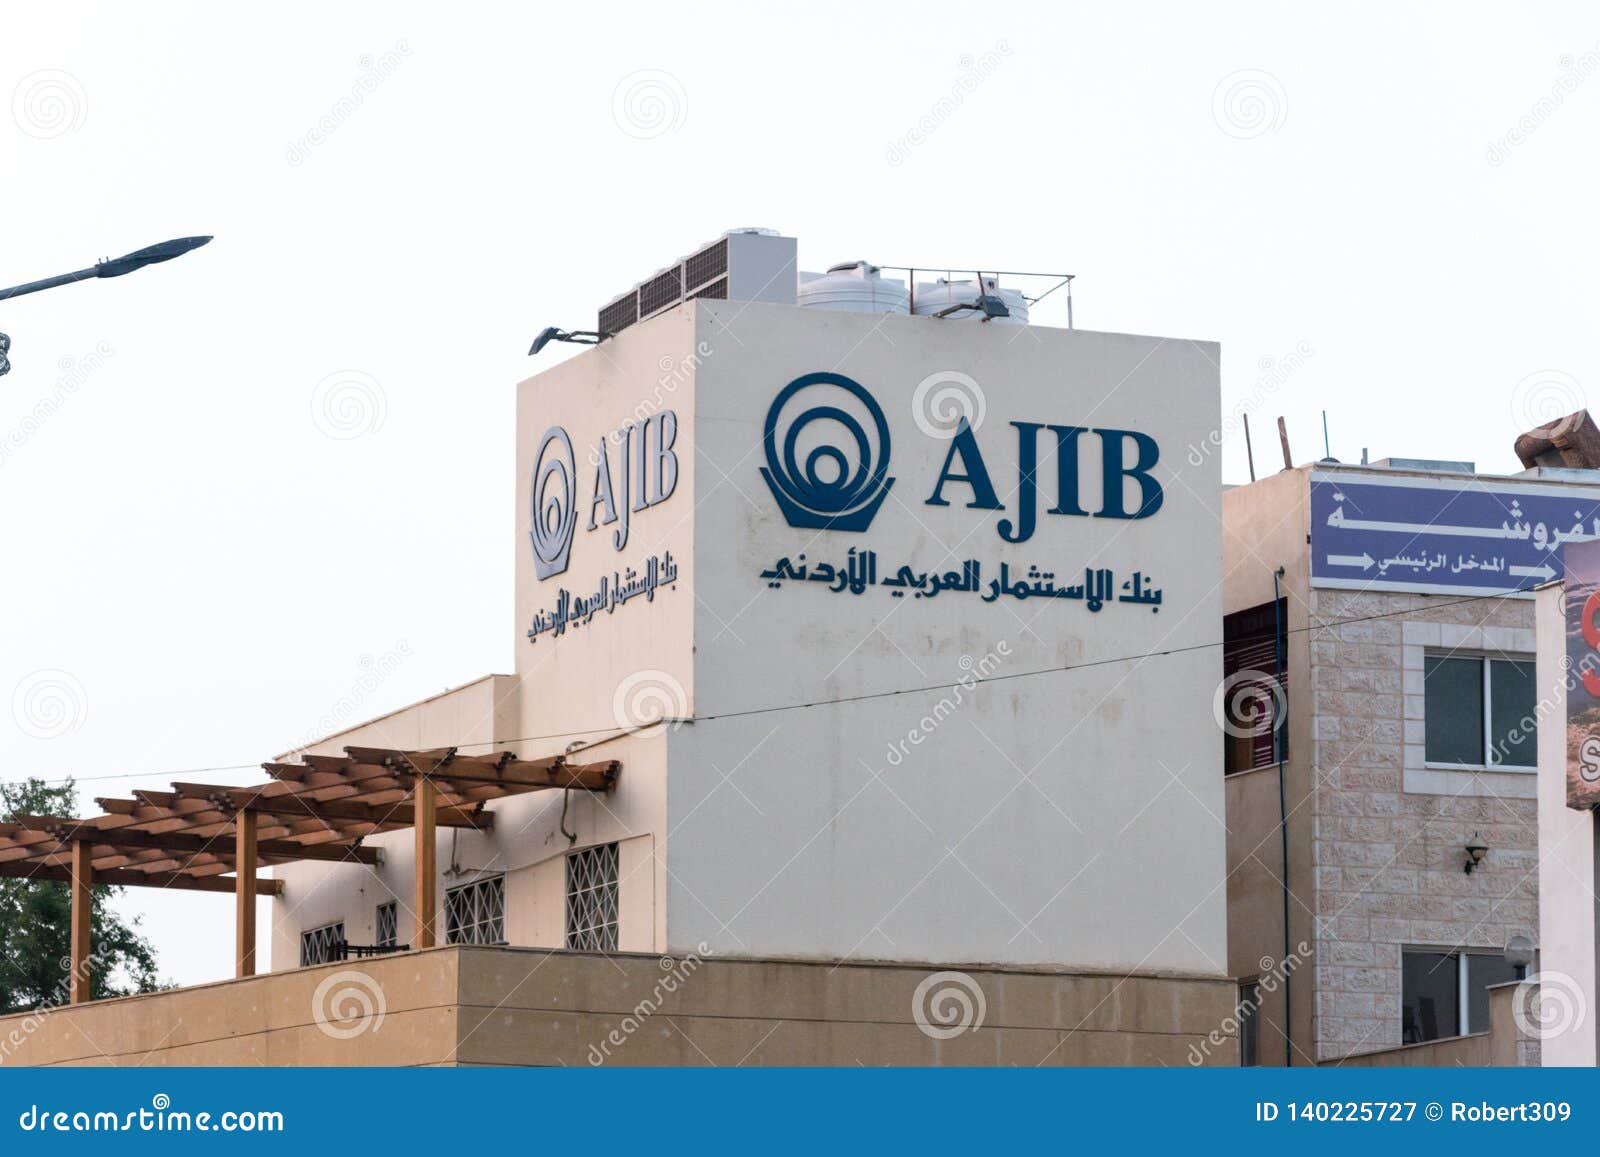 Logo and Sign of Arab Jordan Investment Bank Editorial Photography - Image arab, bank: 140225727